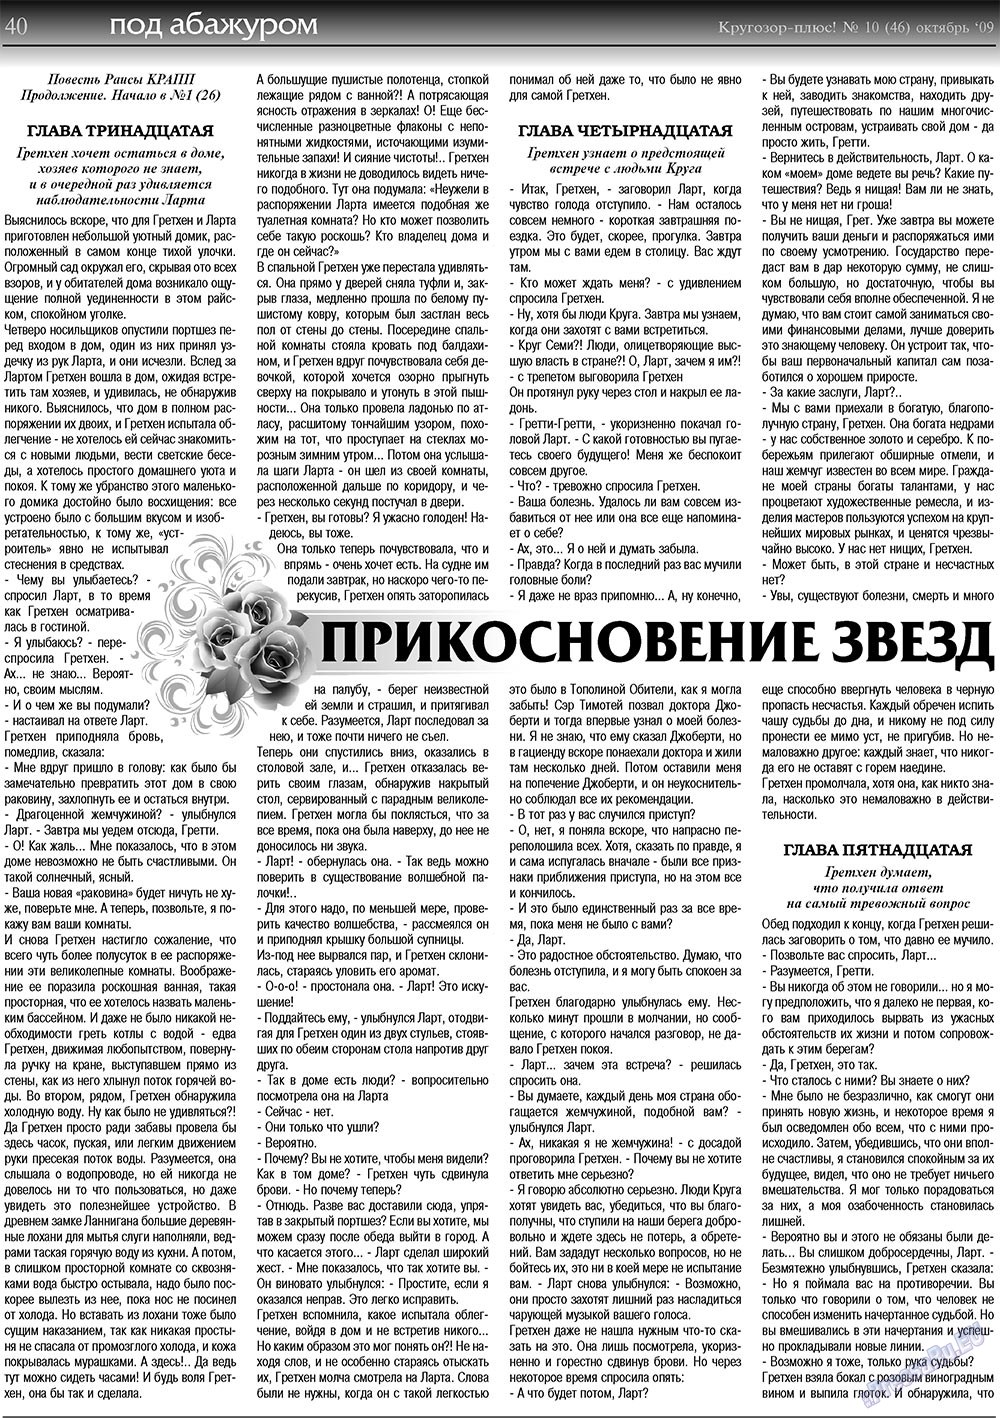 Кругозор плюс! (газета). 2009 год, номер 10, стр. 40